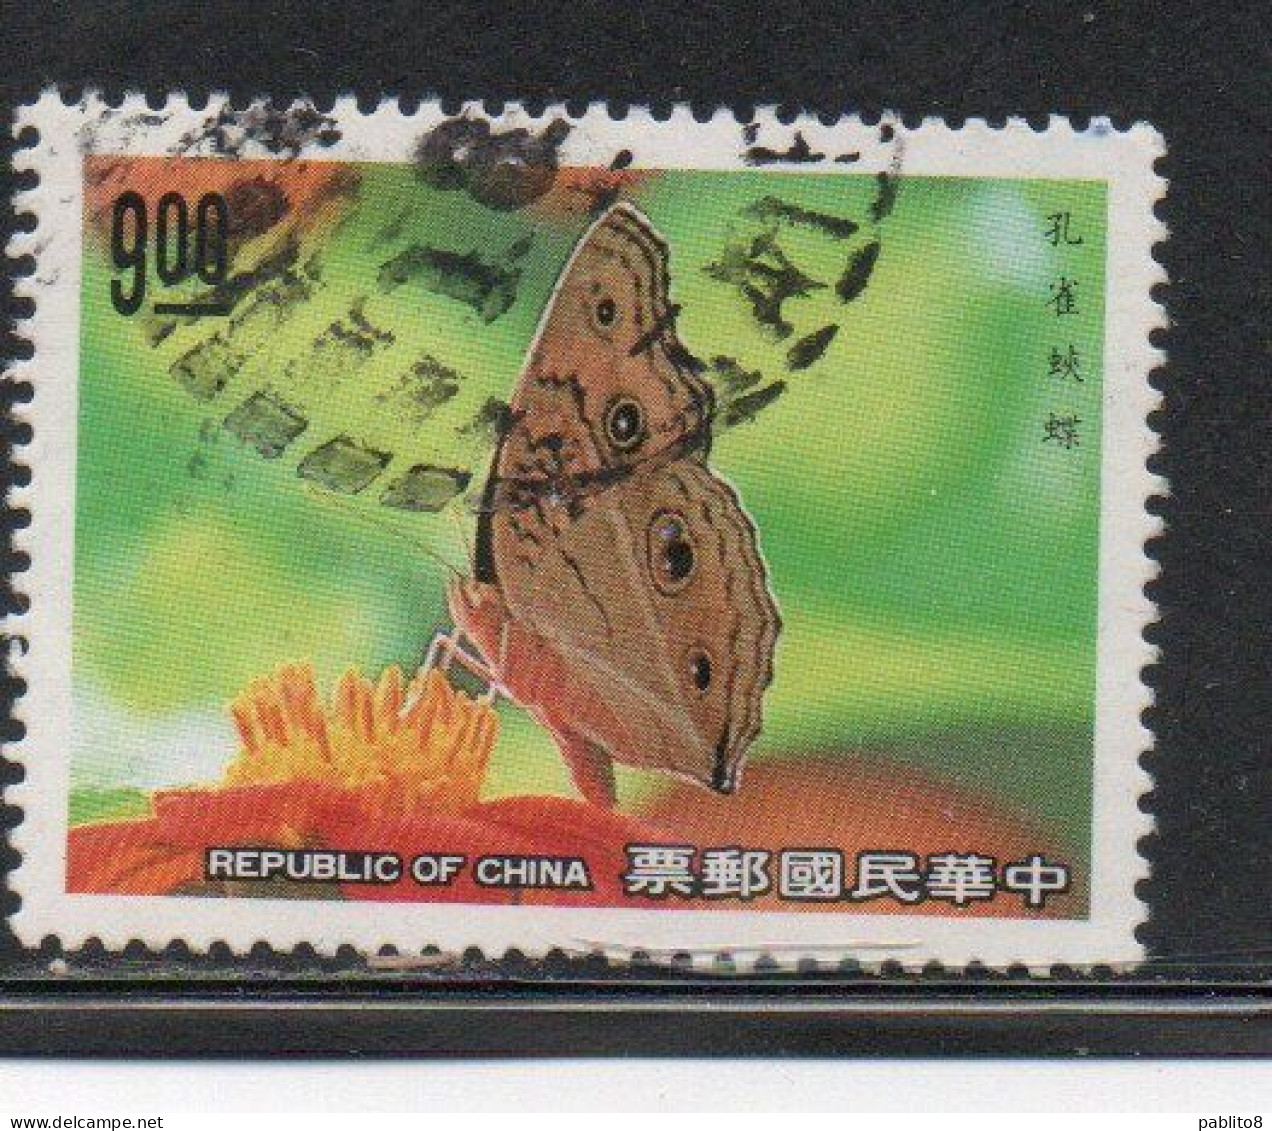 CHINA REPUBLIC CINA TAIWAN FORMOSA 1990 BUTTERFLIES PRECIS ALMANA 9$ USED USATO OBLITERE' - Usados